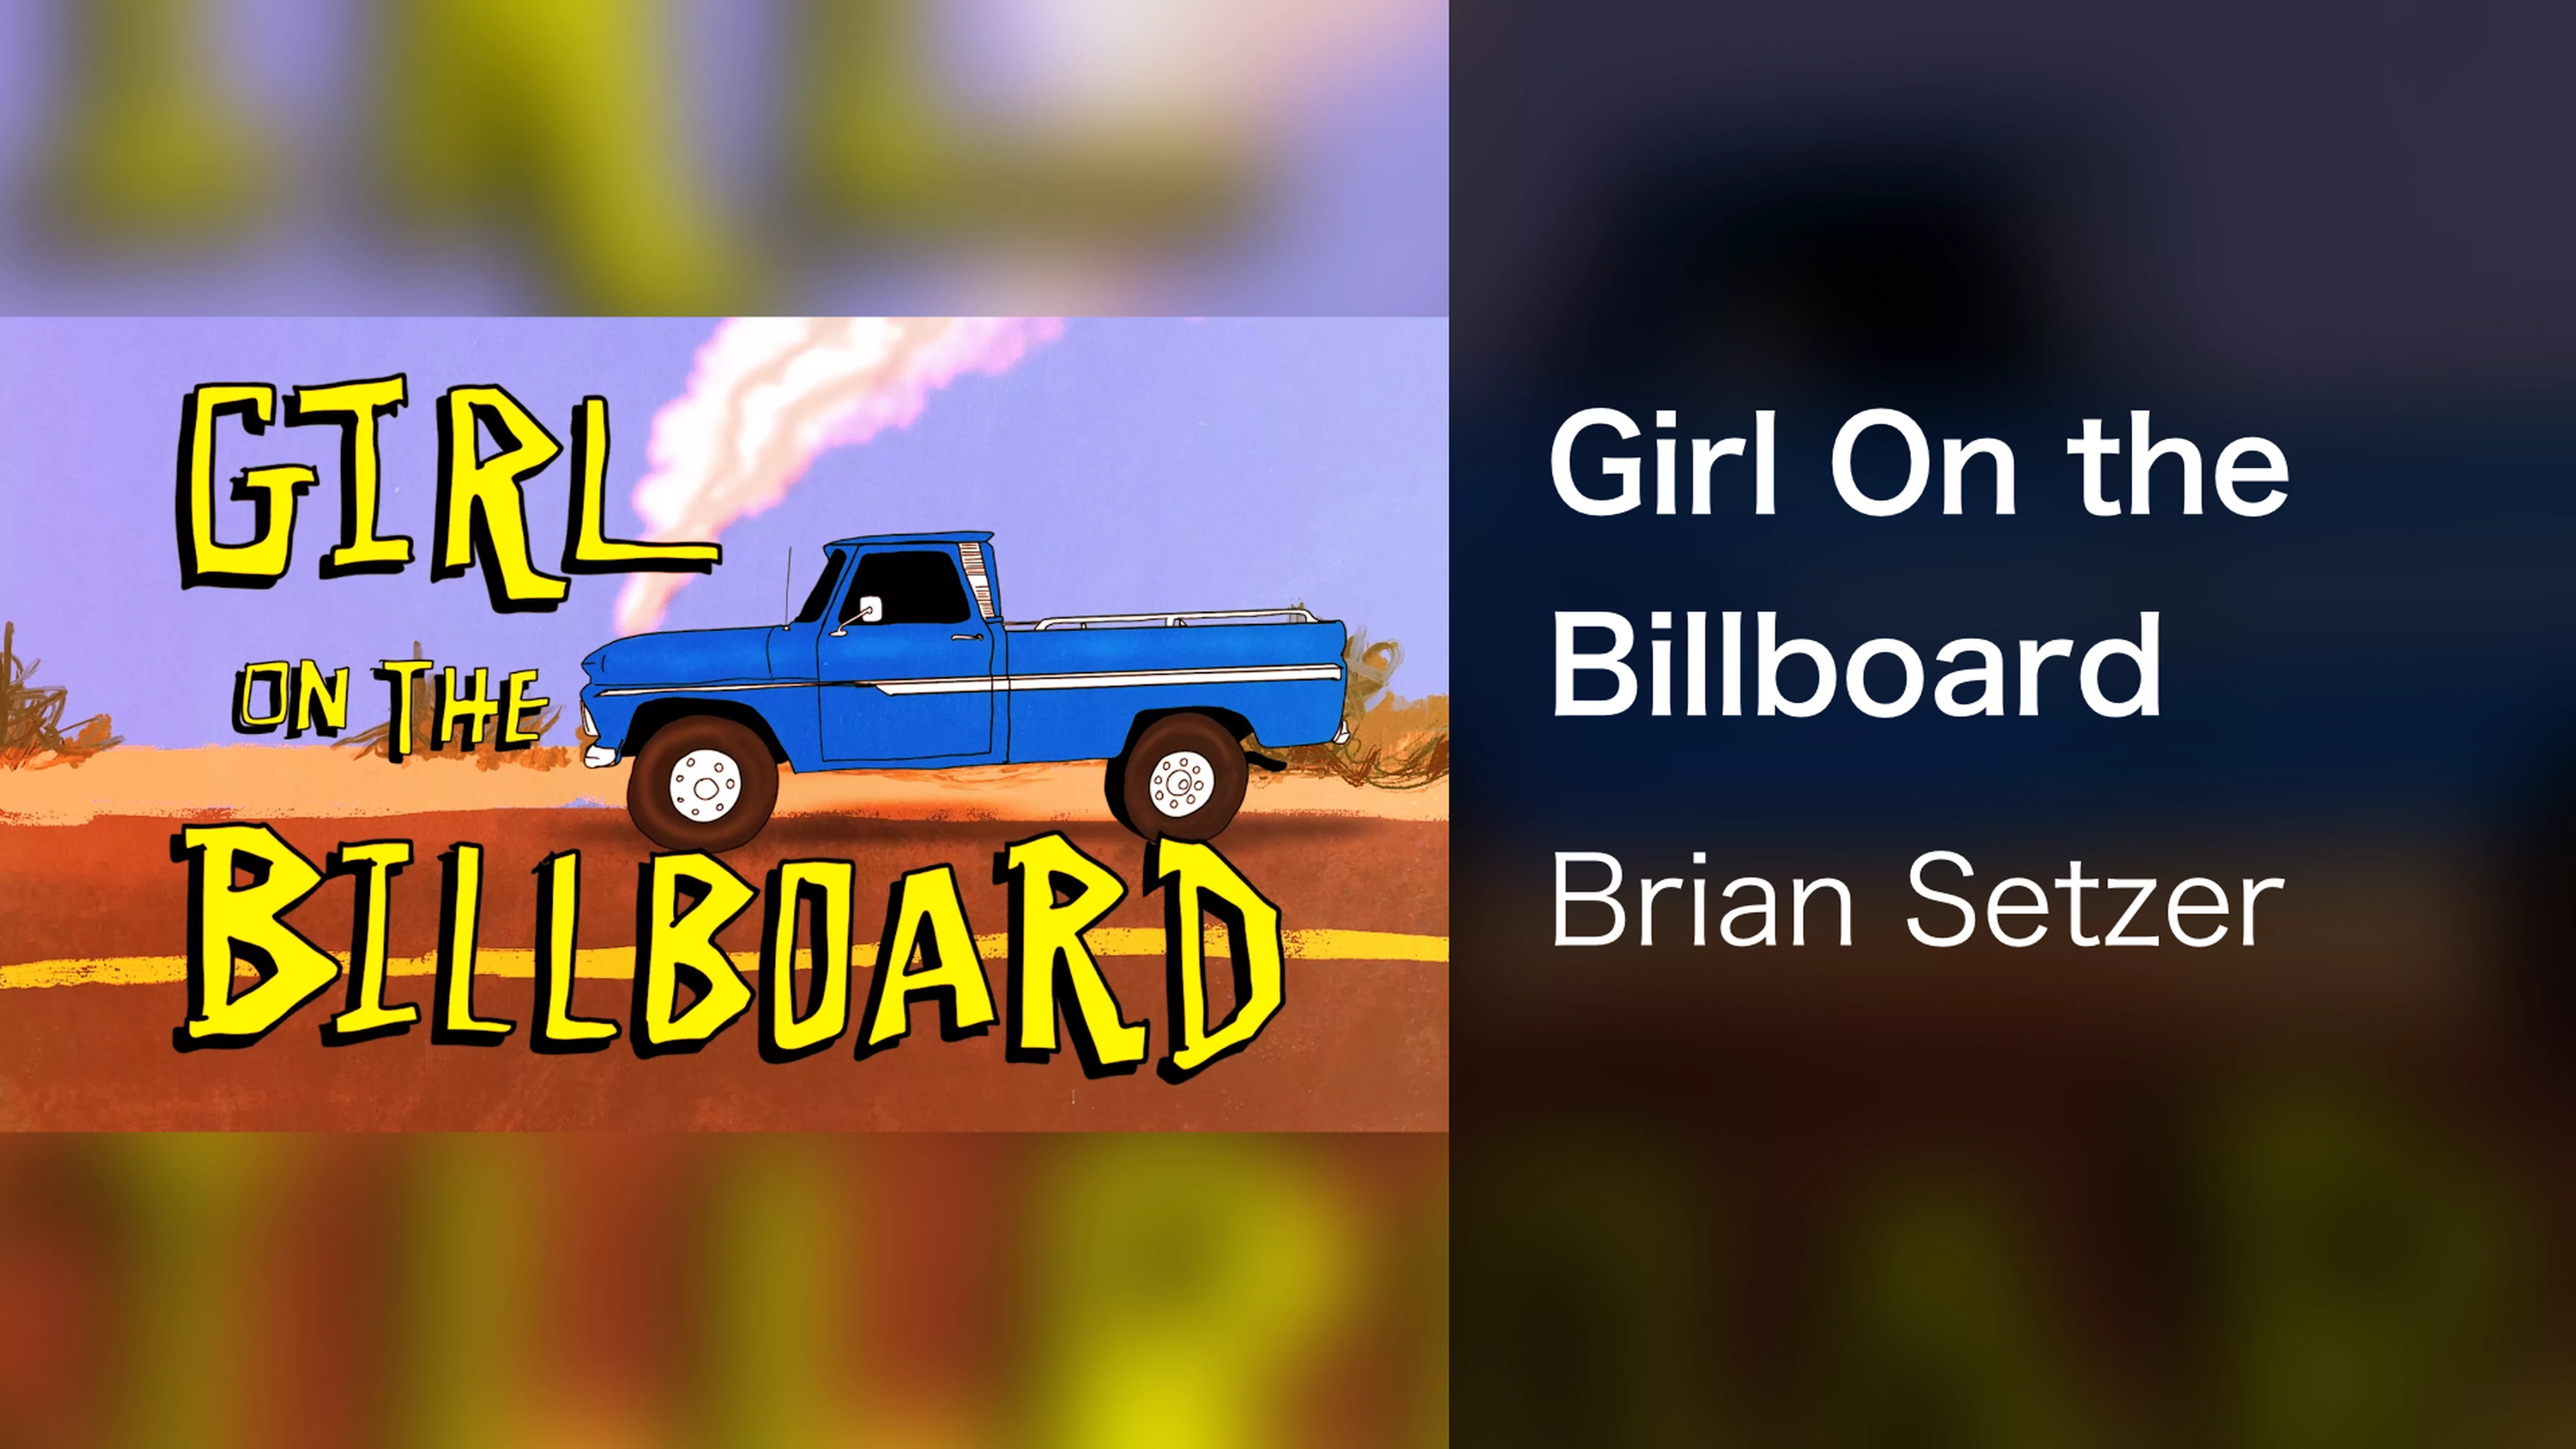 Girl On the Billboard